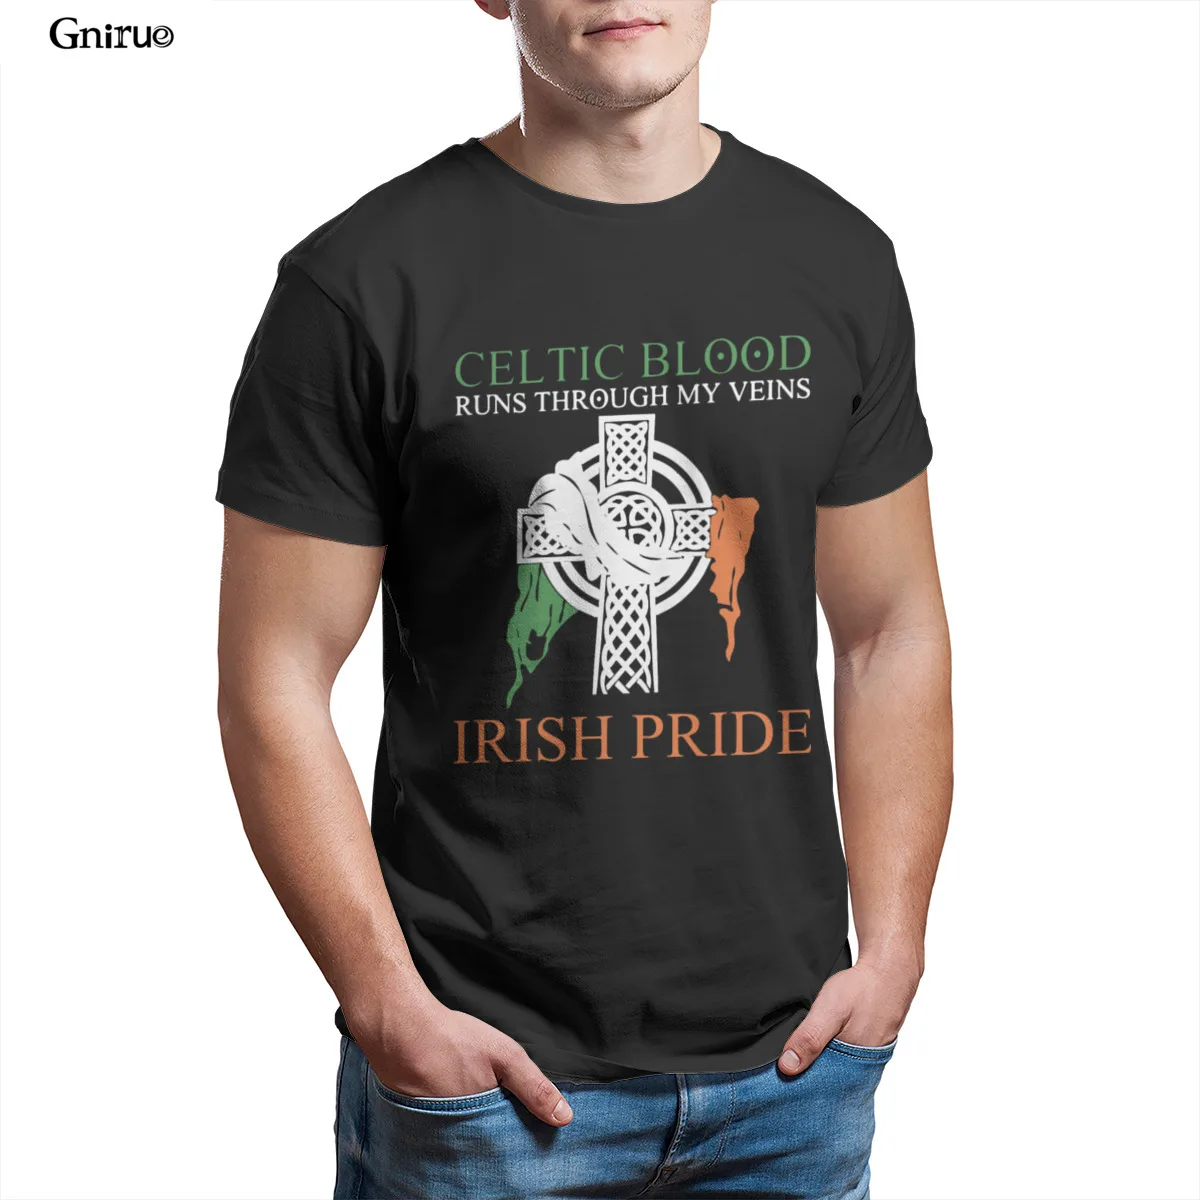 Wholesale Celtic blood runs through my veins irish pride Unisex Tie Dye T-Shirt Pink Female Woman  Mens Clothes 100623 images - 6